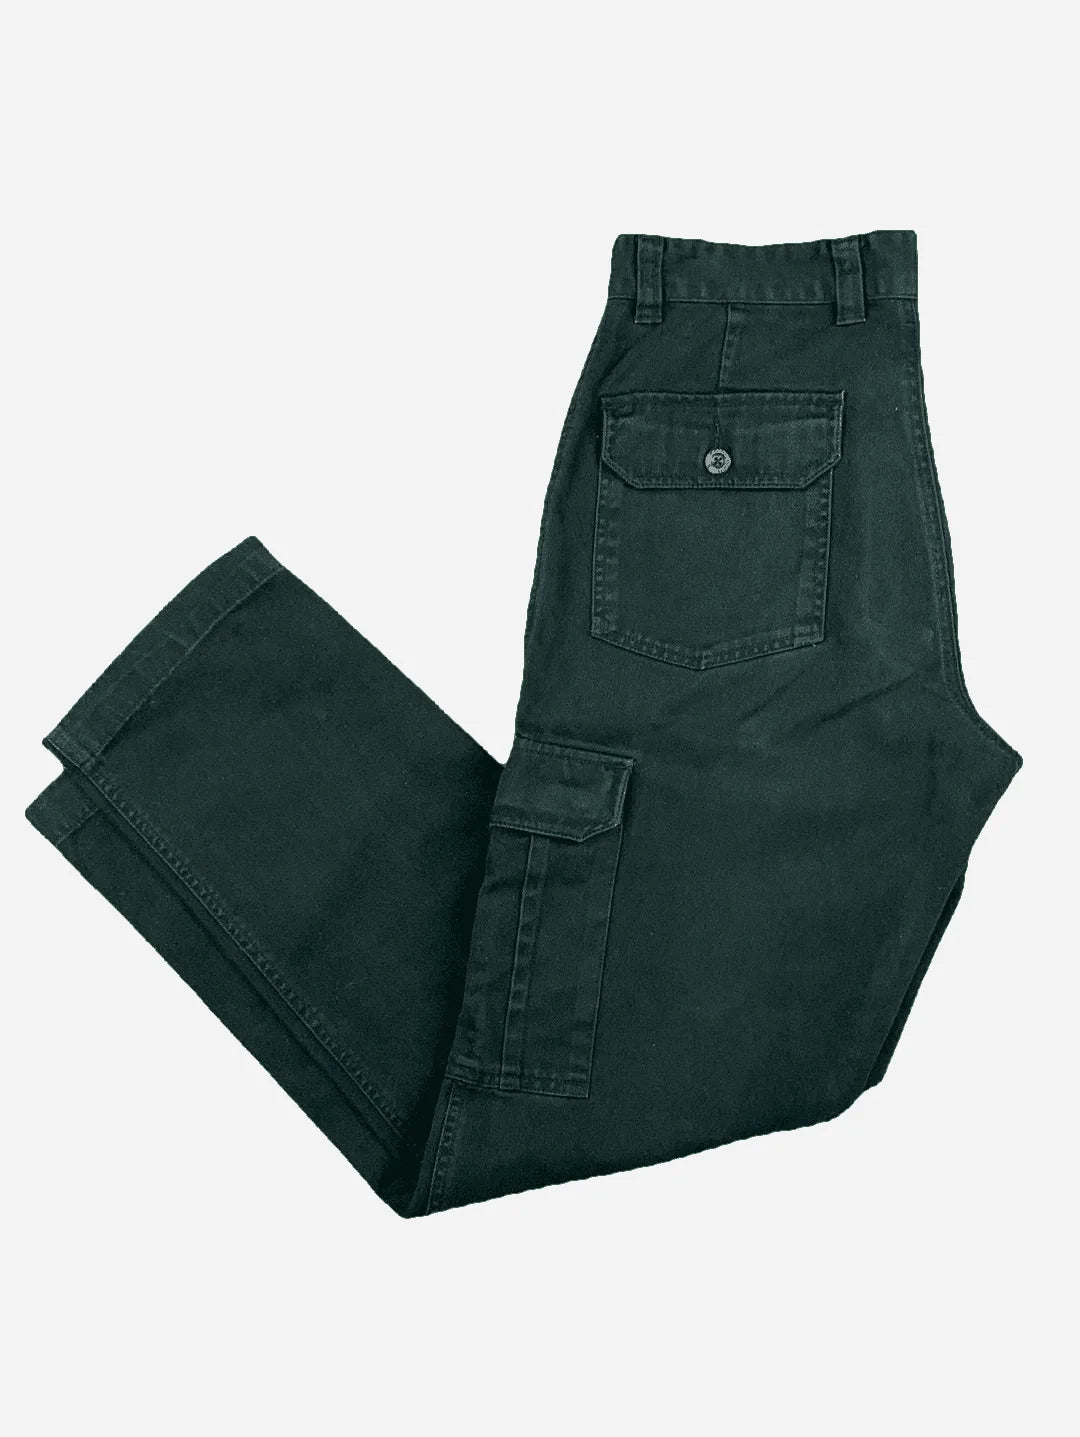 Mc. Gordon Cargo Pants 32/32 (M)